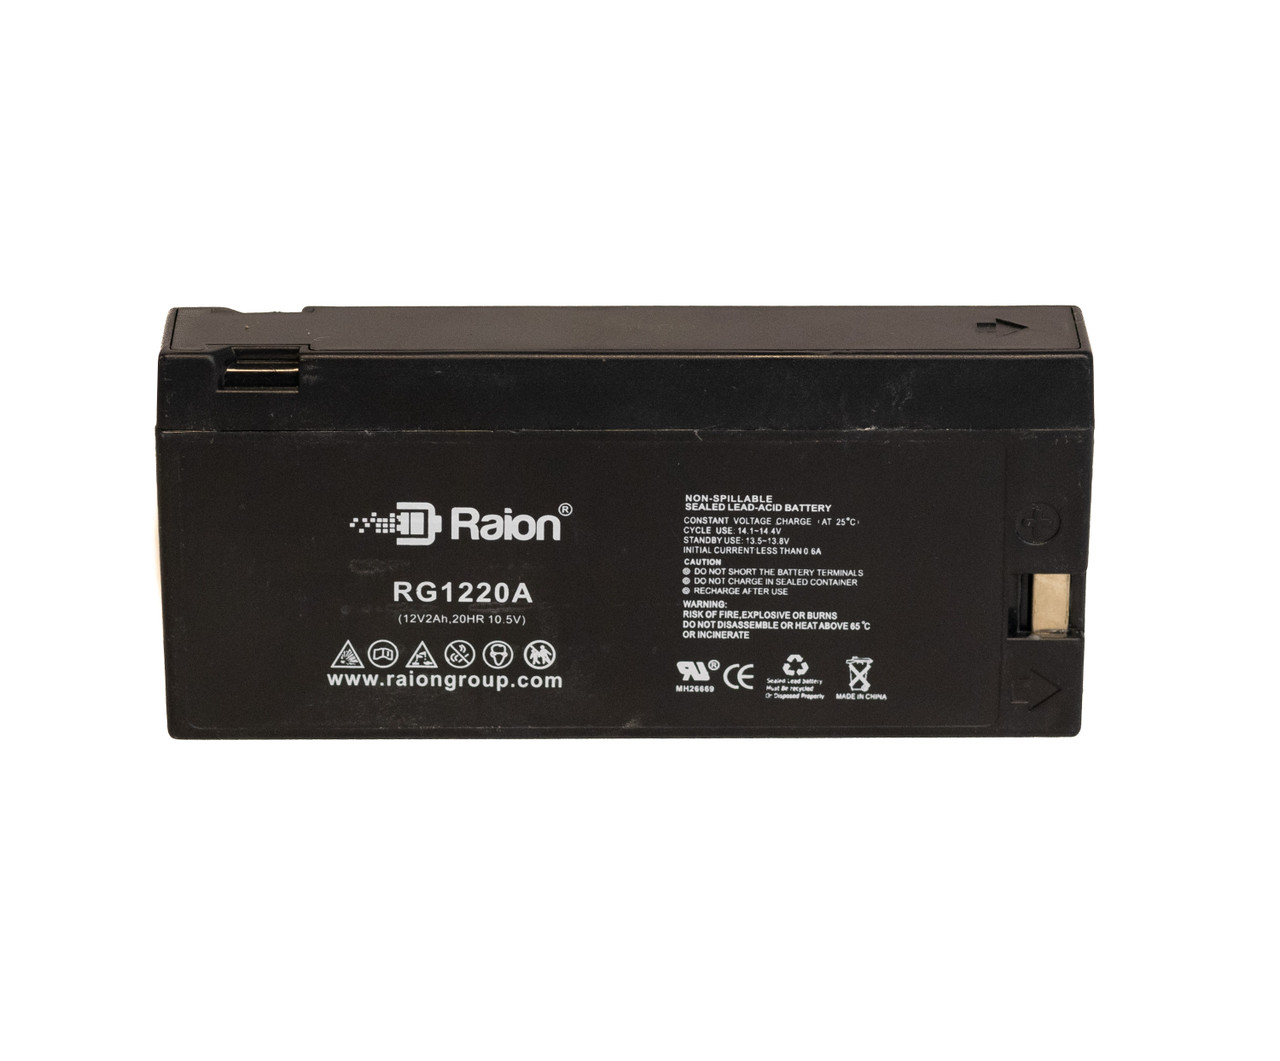 Raion Power RG1220A SLA Battery for Curtis Mathes DV-700